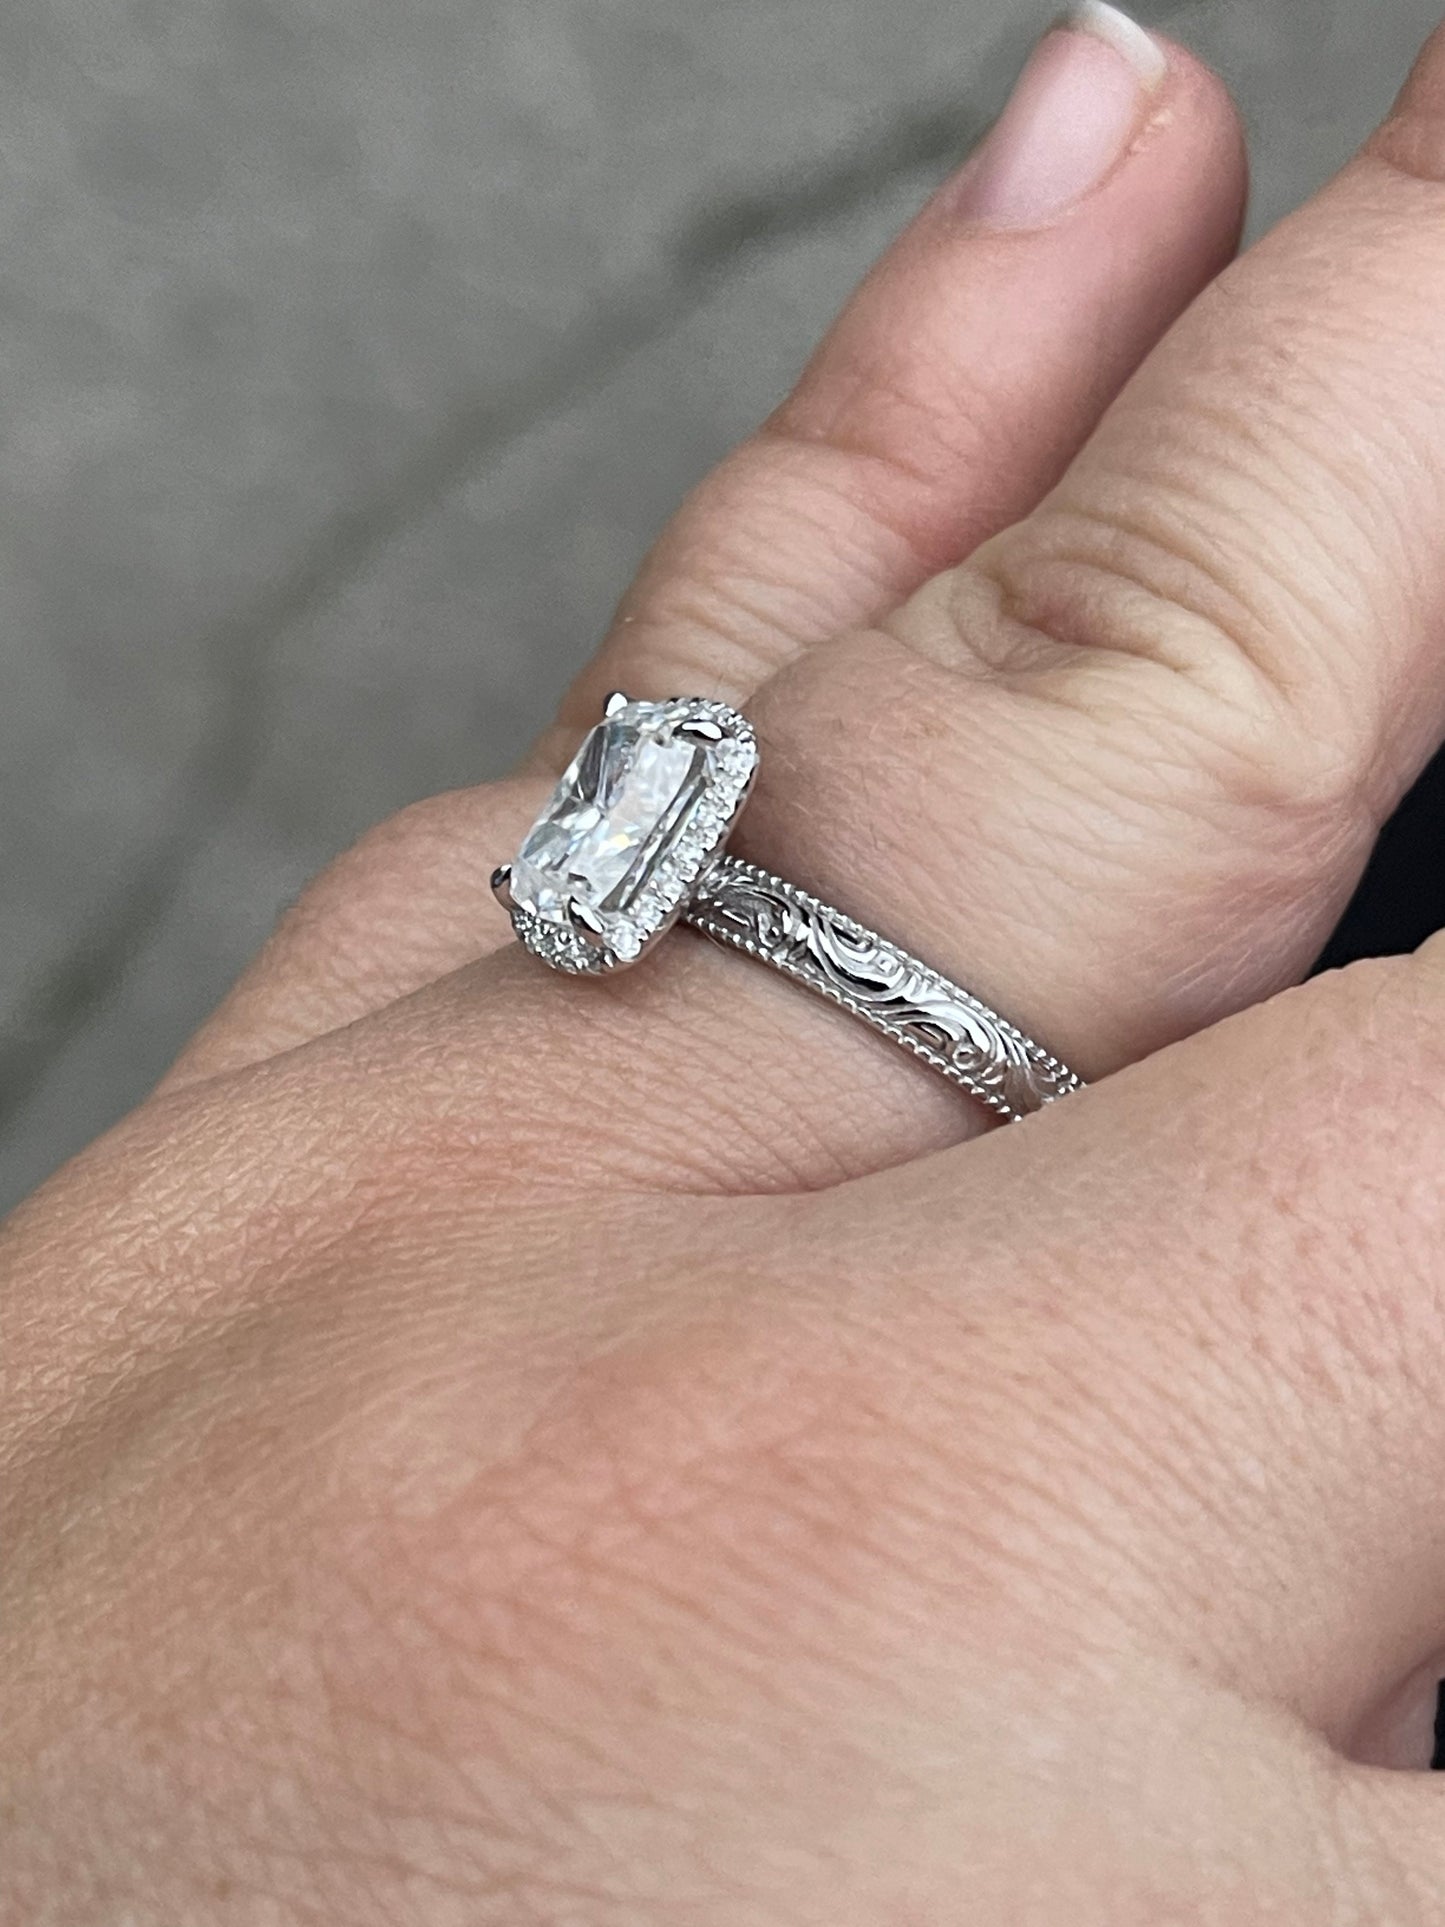 Aspen Sterling Silver Engagement Ring